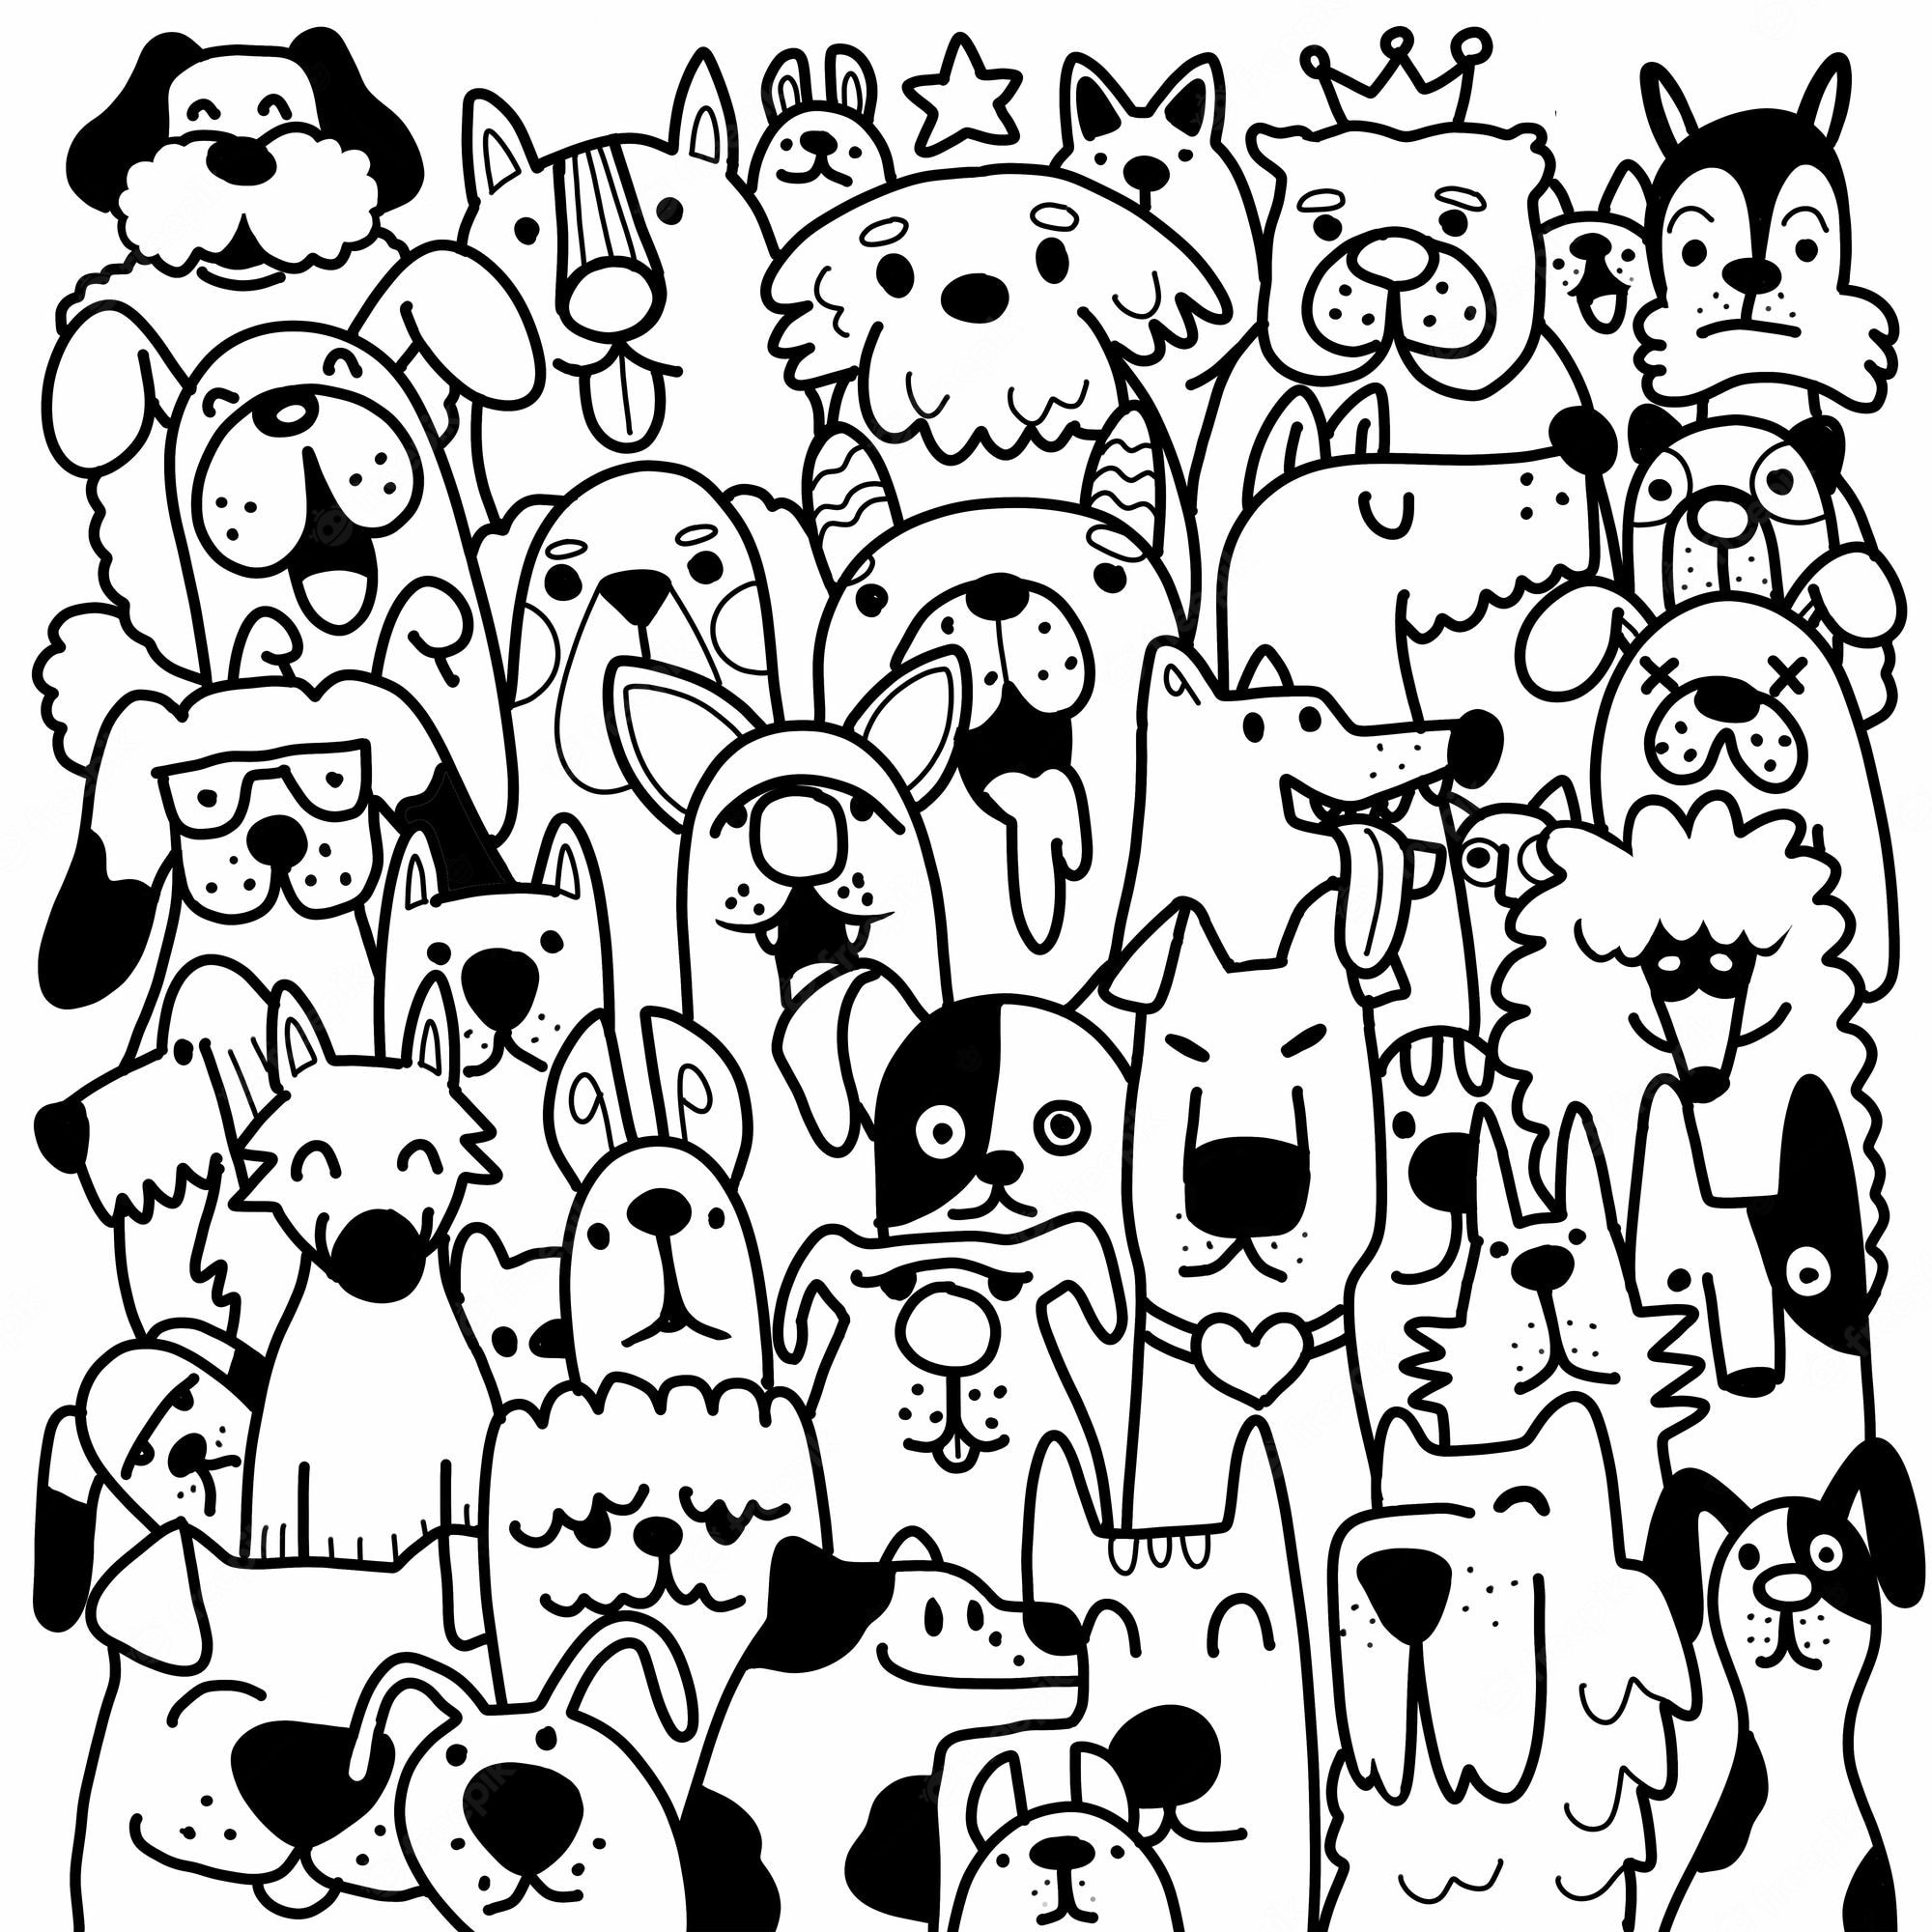 Cute Cartoon Animal Face Wallpapers